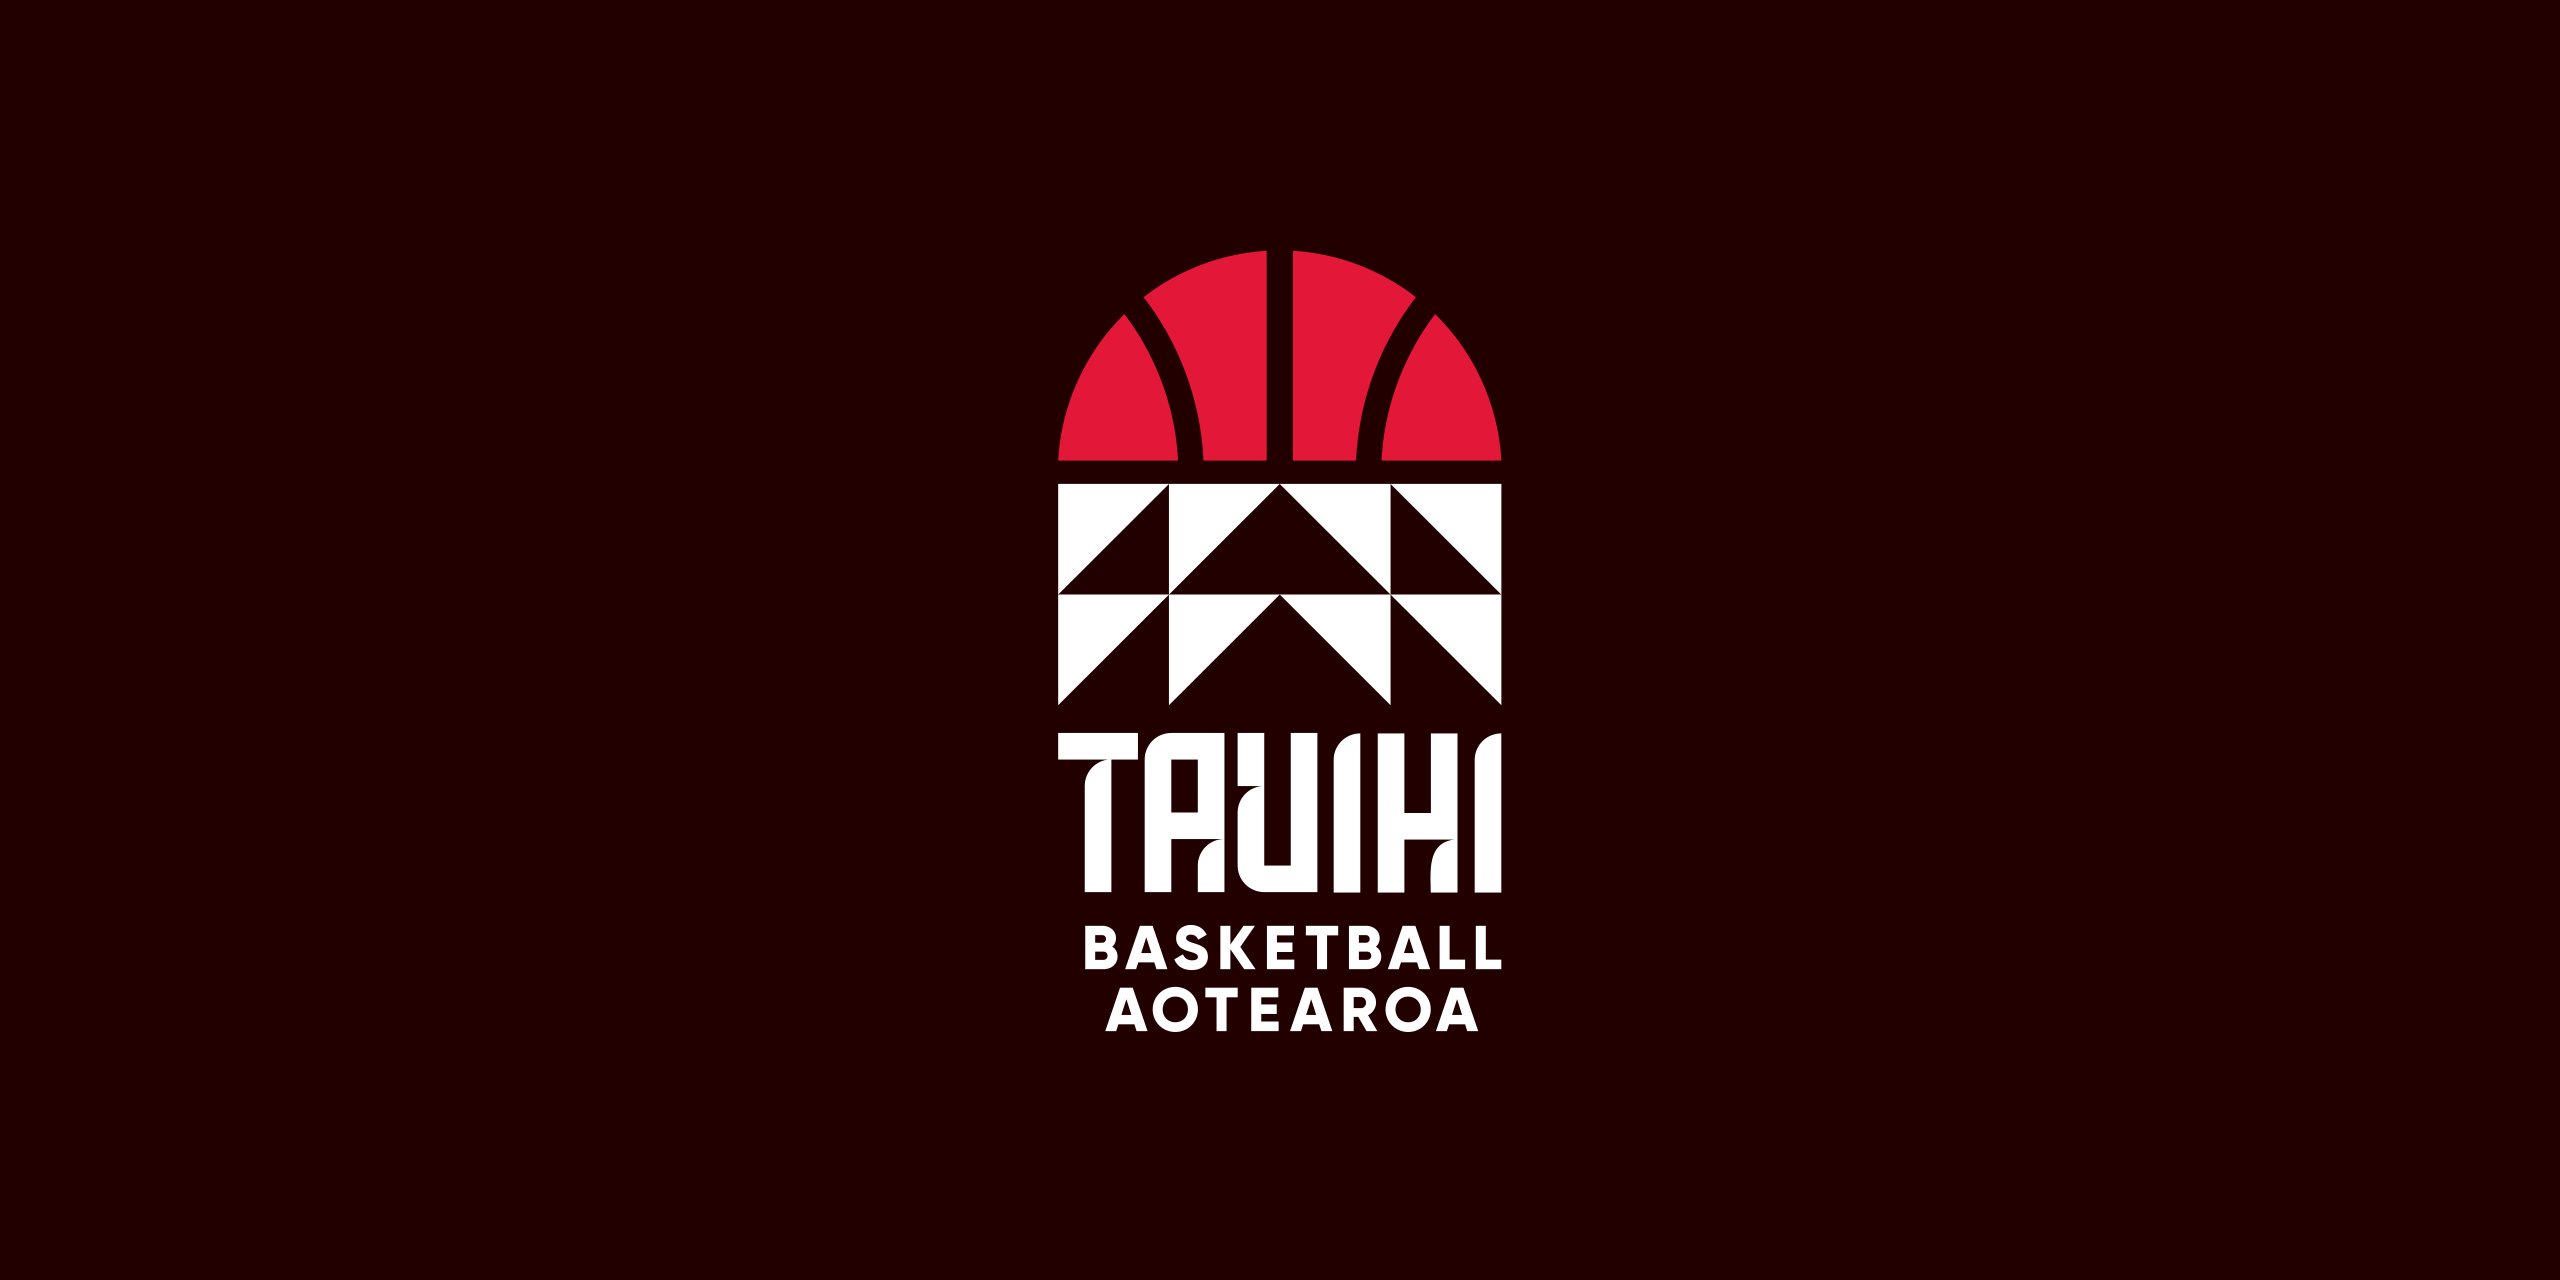 Tauihi_Basketball_Aotearoa_Hero_SixOneNine